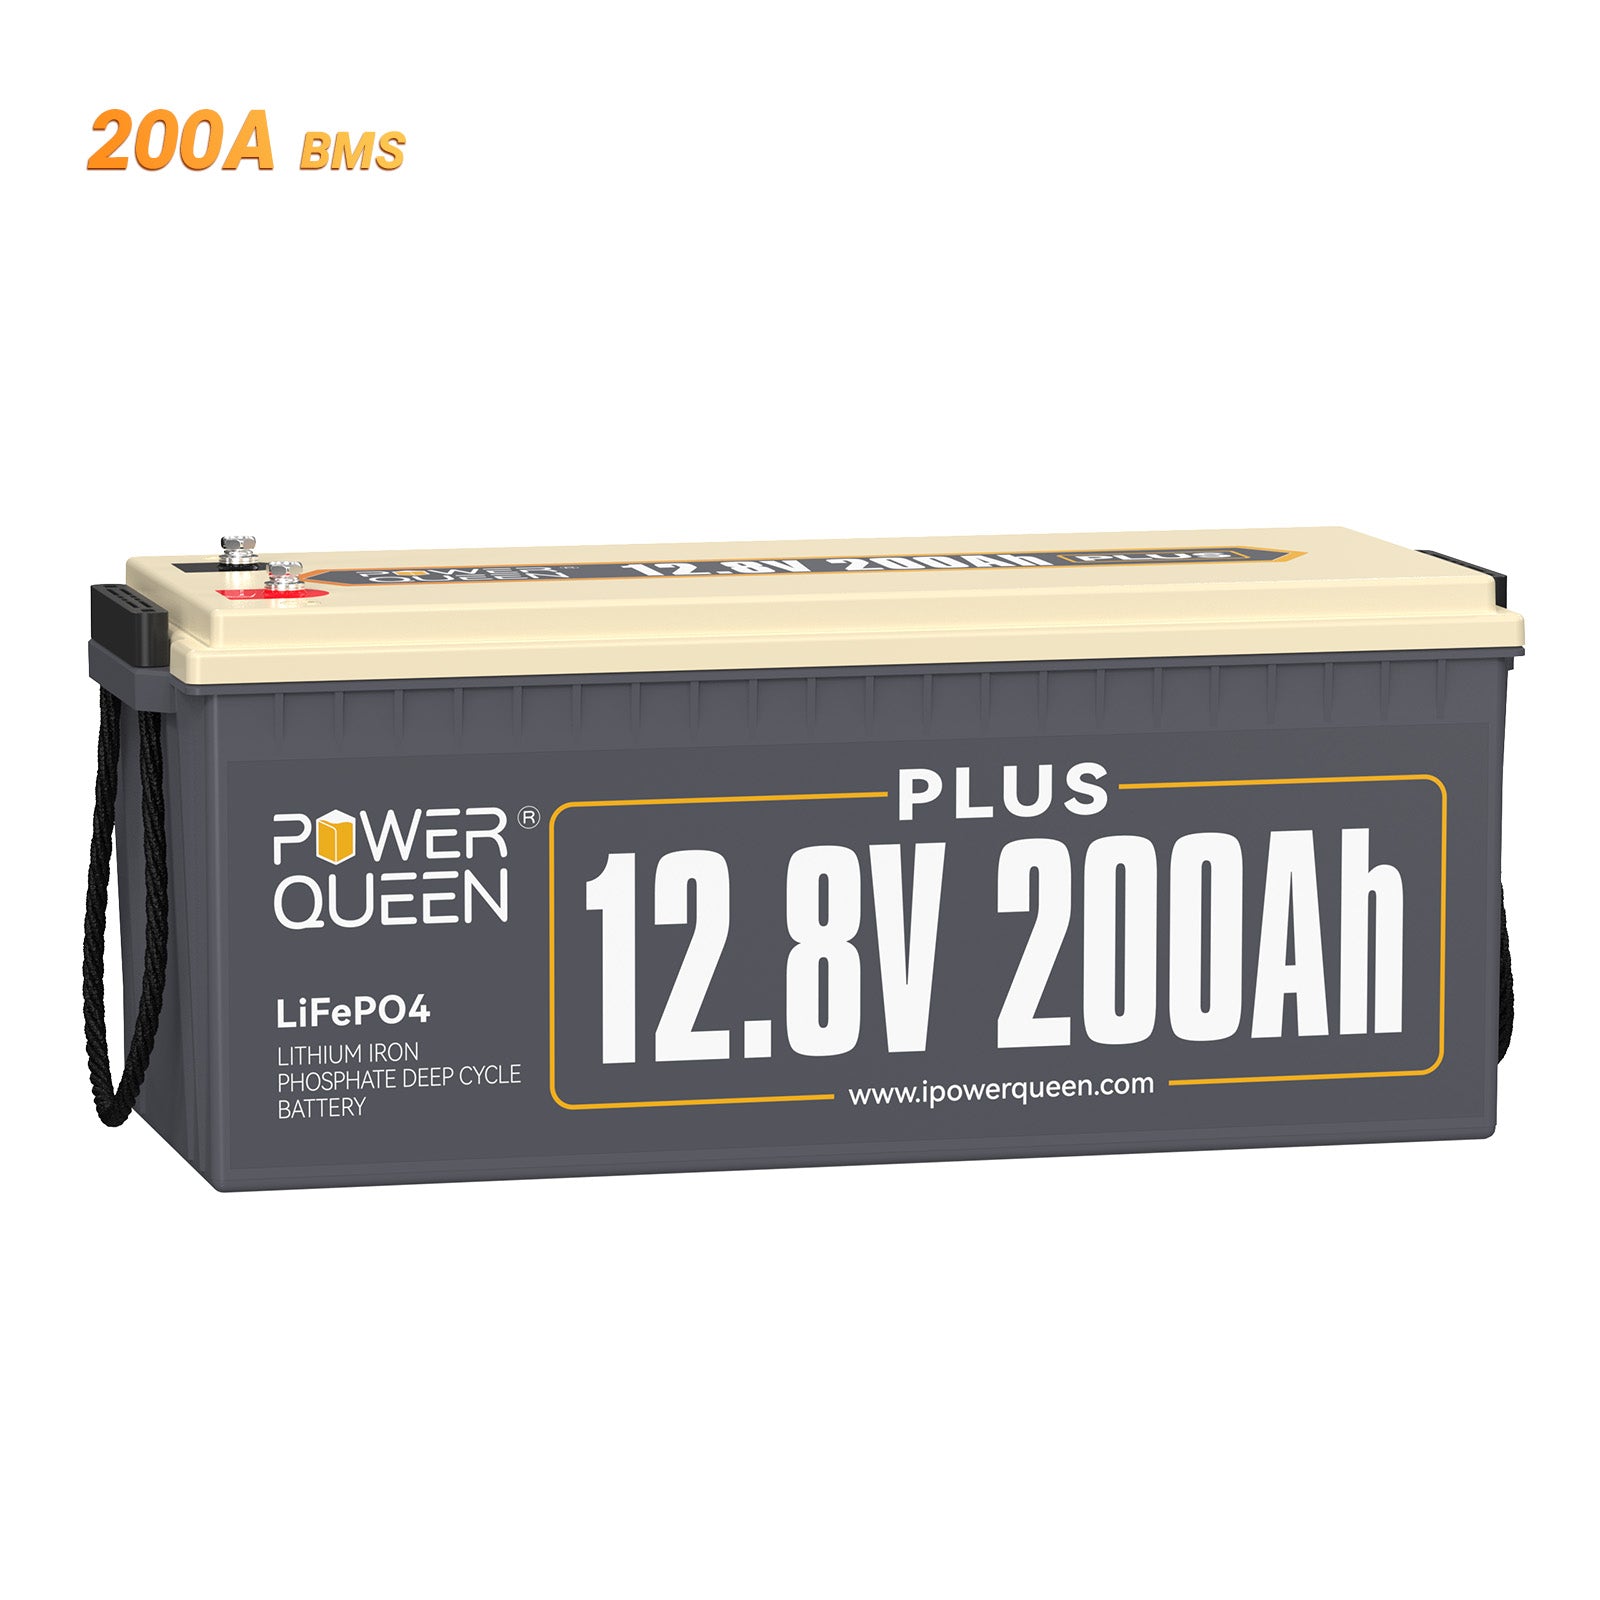 【0% Mwst.】Power Queen 12V 200Ah Plus LiFePO4 Batterie, Eingebautes 200A BMS